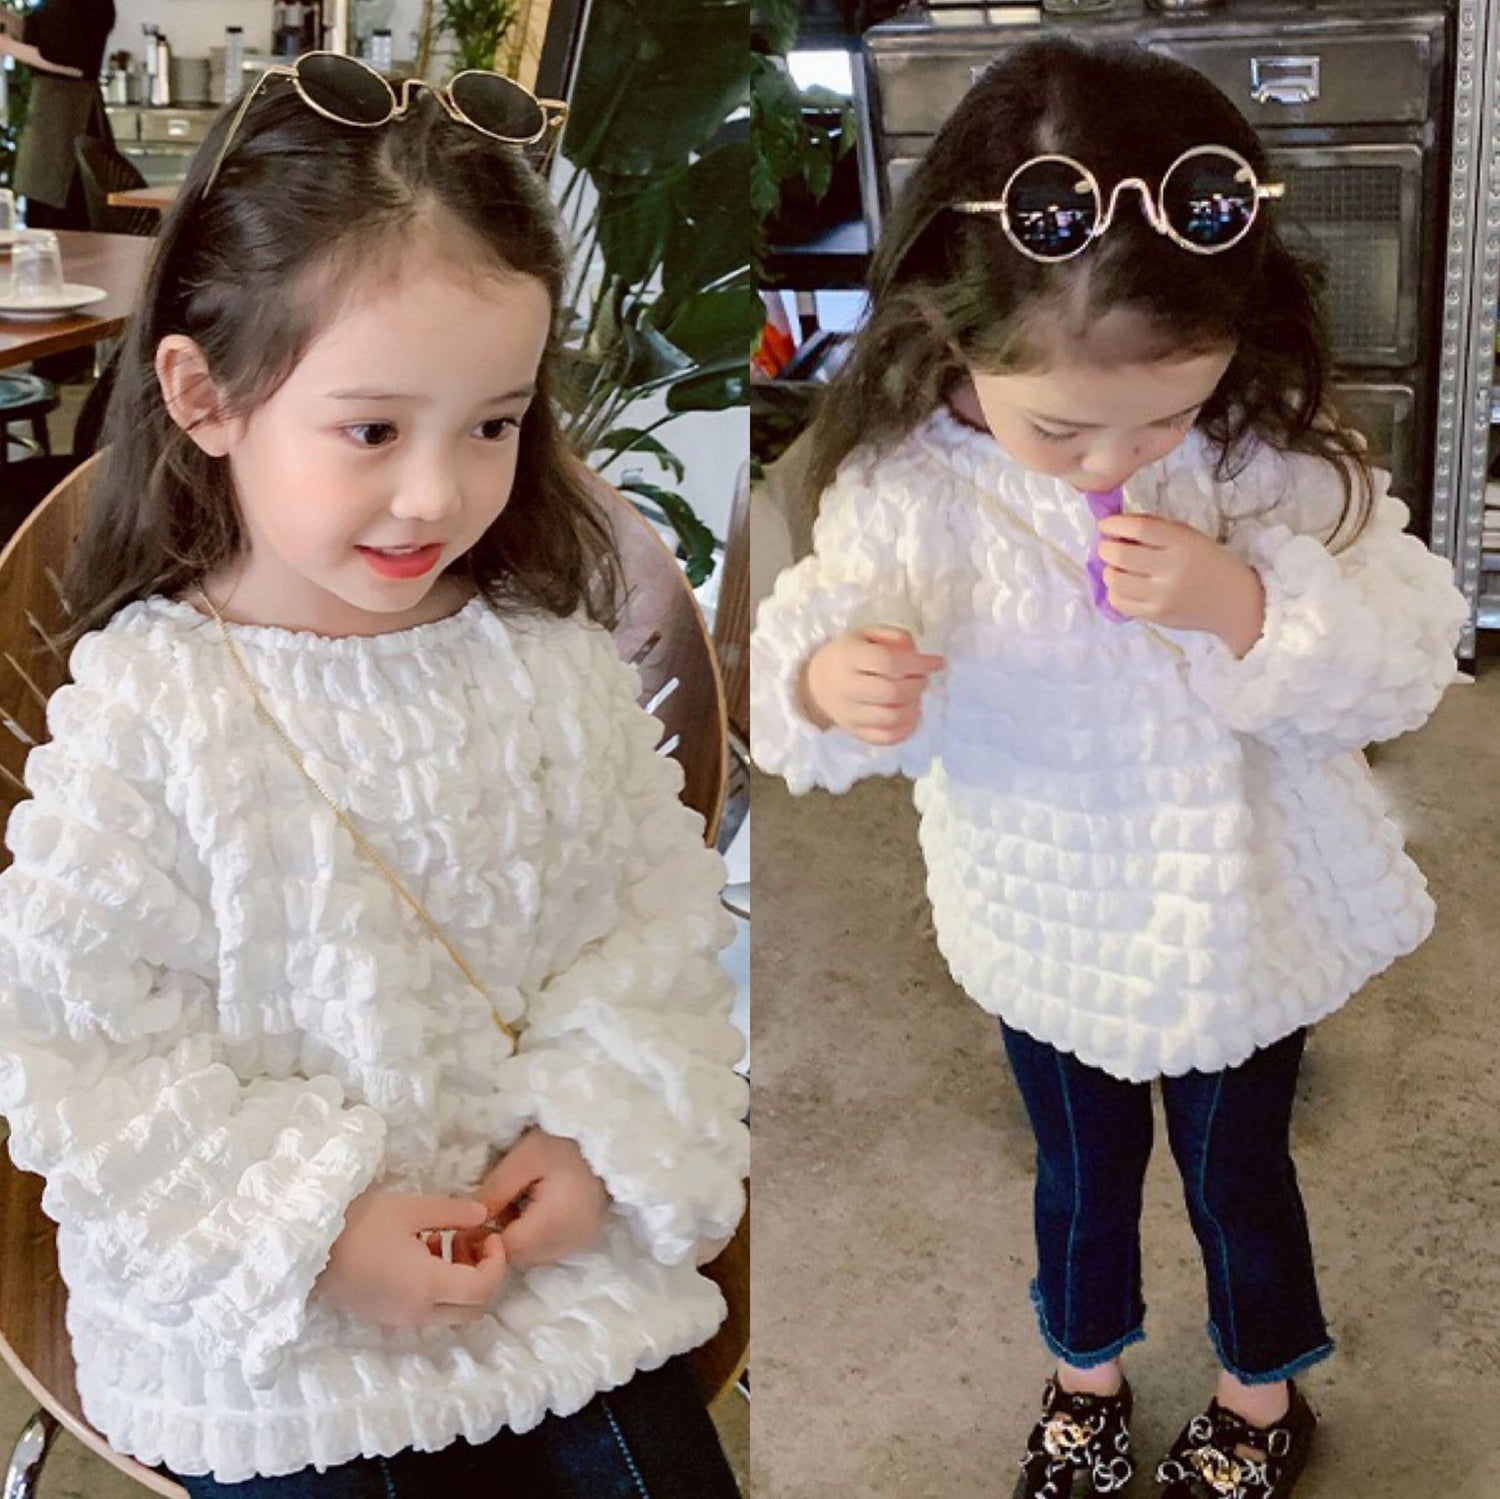 [507810] -Atasan Sweater Lengan Panjang Fashion Anak Perempuan Import - Motif Soft Cloud